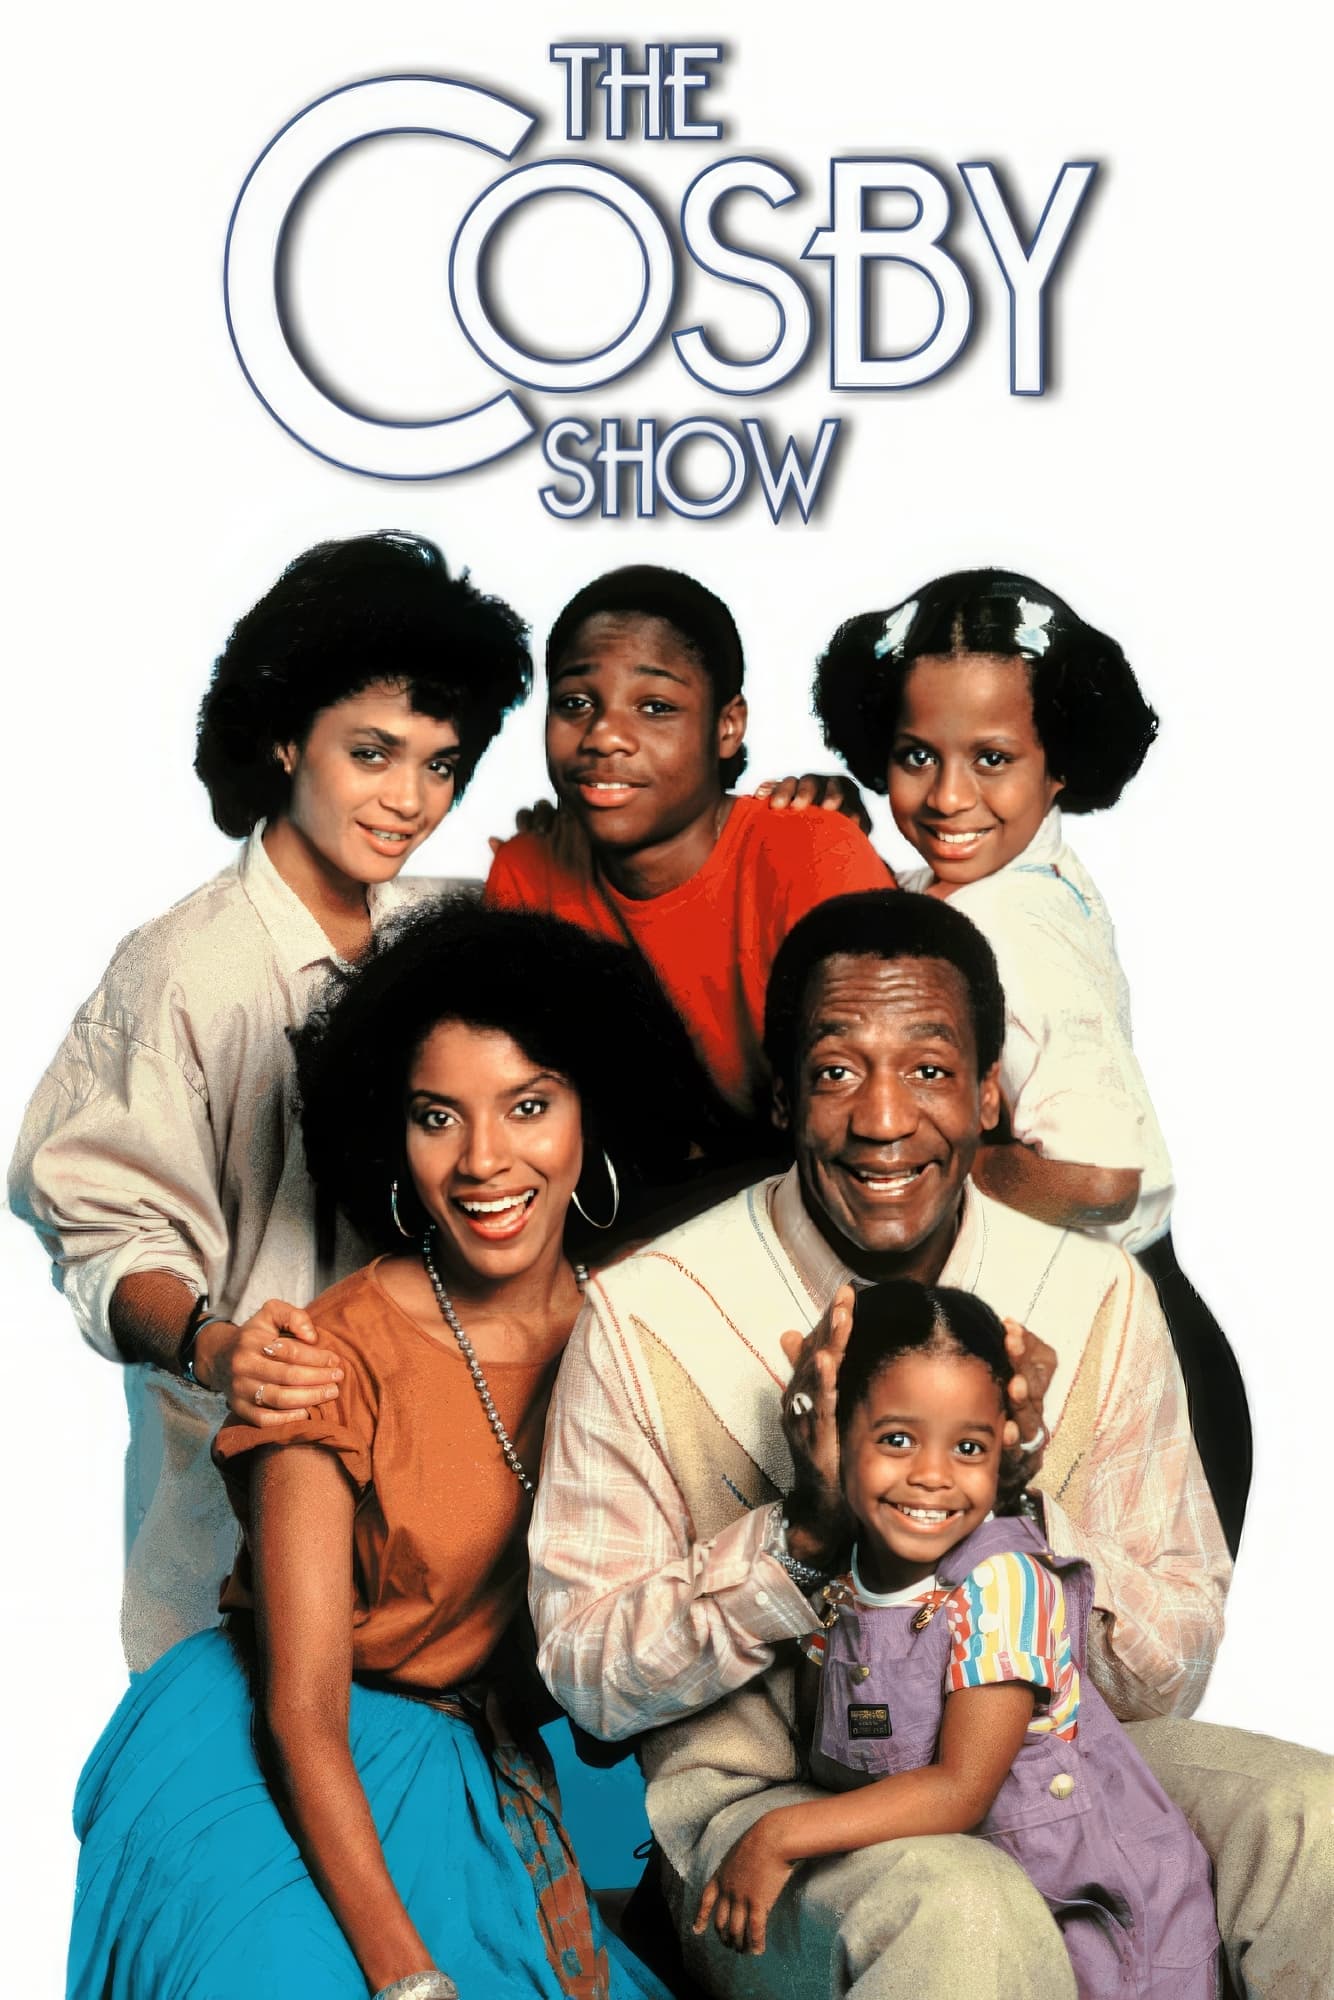 El show de Bill Cosby